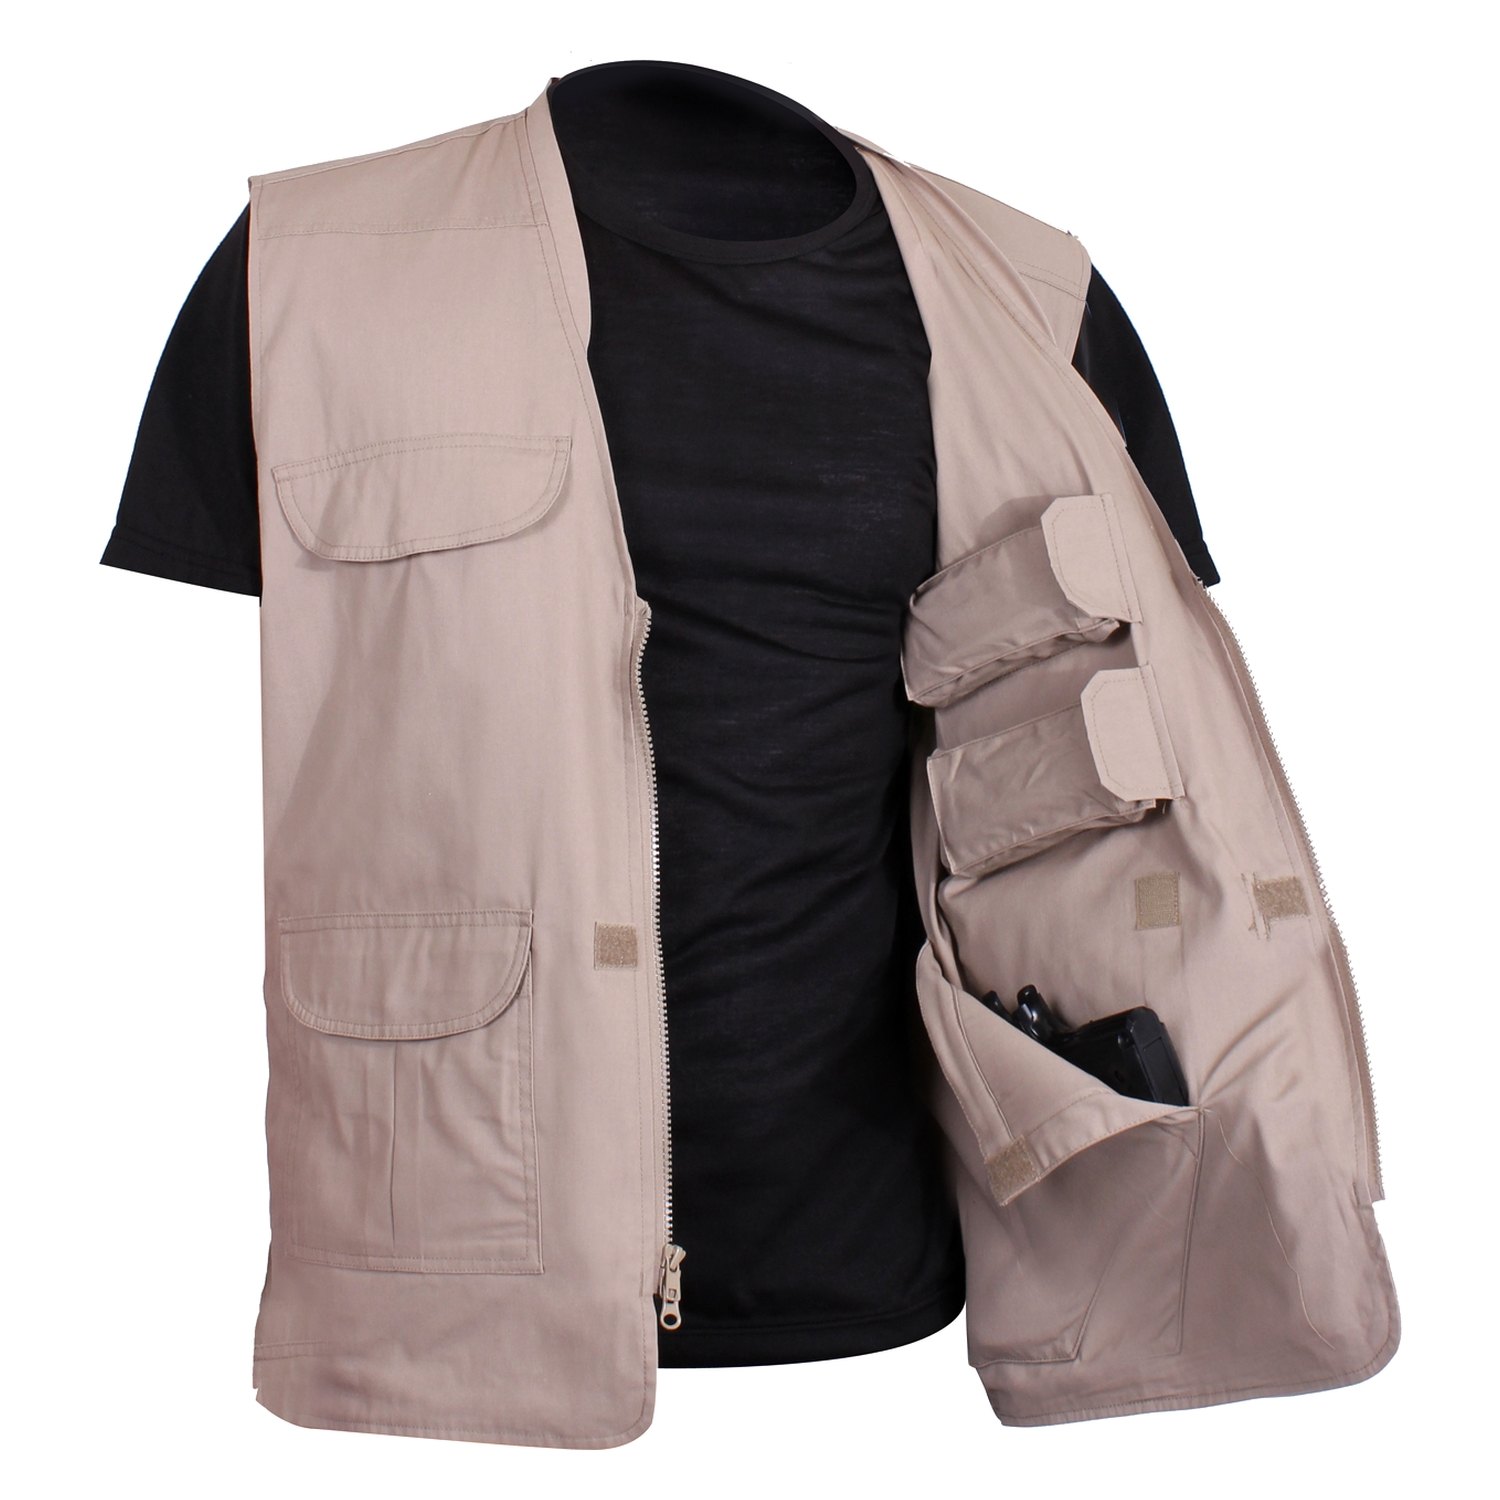 men's lightweight travel vest